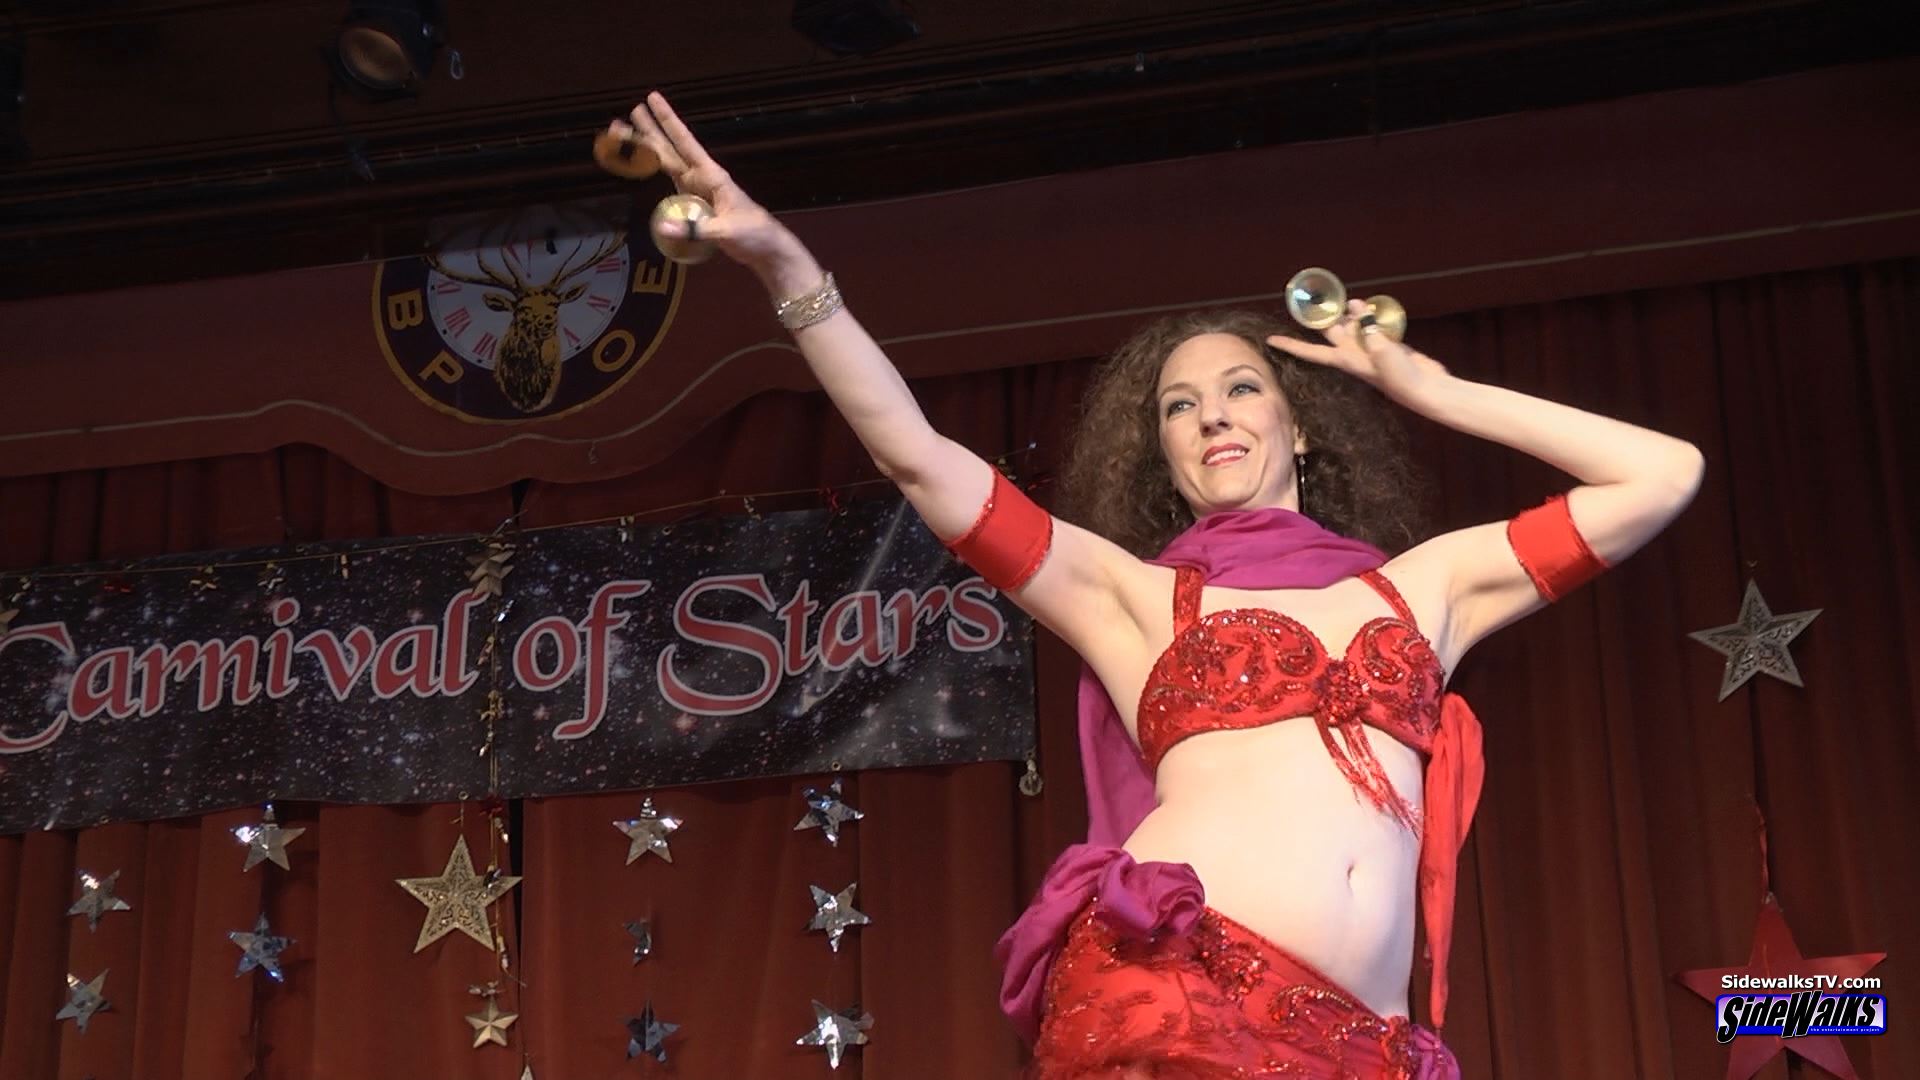 Belly dancer Jennifer Cooper performs on stage at Carnival of Stars